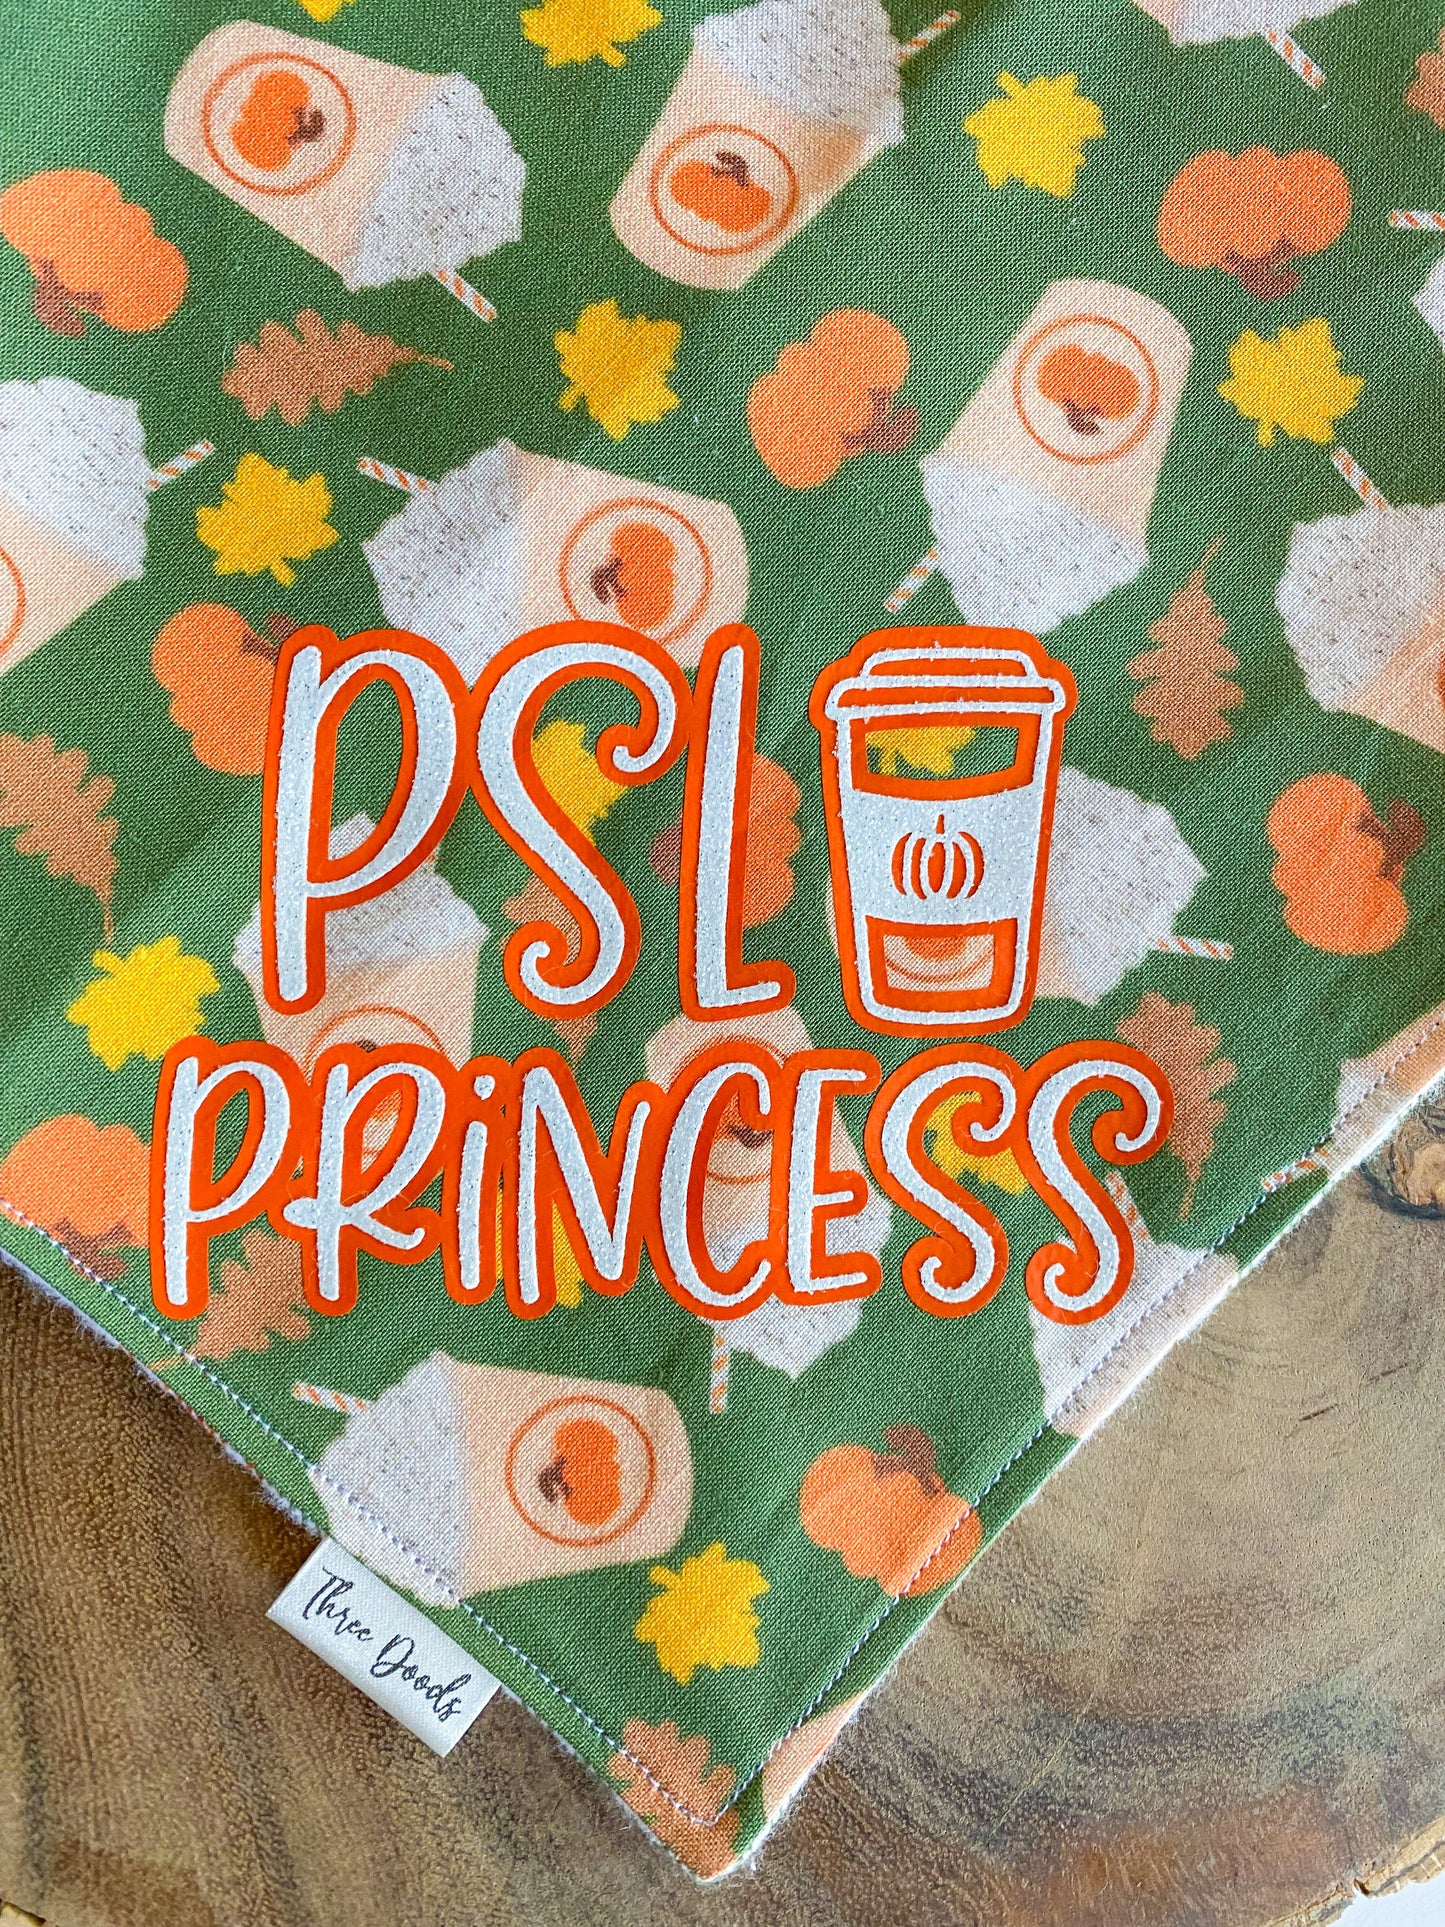 PSL Princess Vinyl Add-on